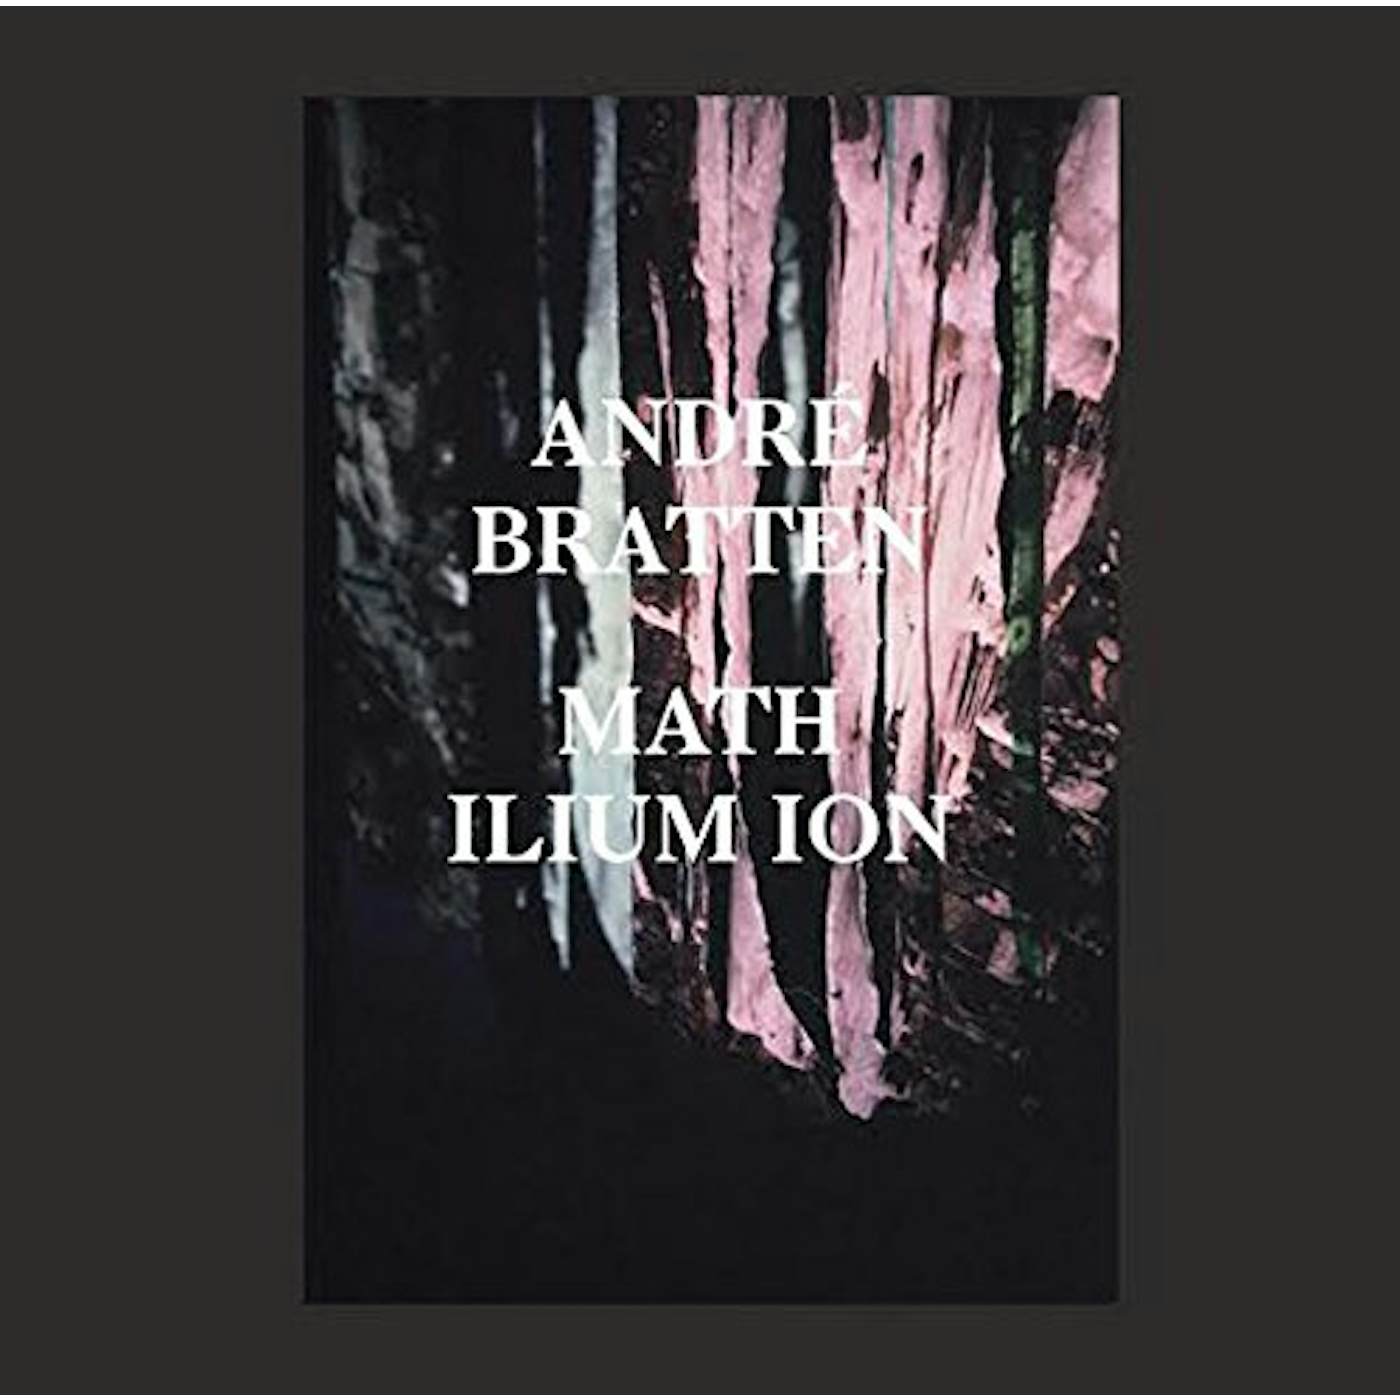 André Bratten Math Ilium Ion Vinyl Record